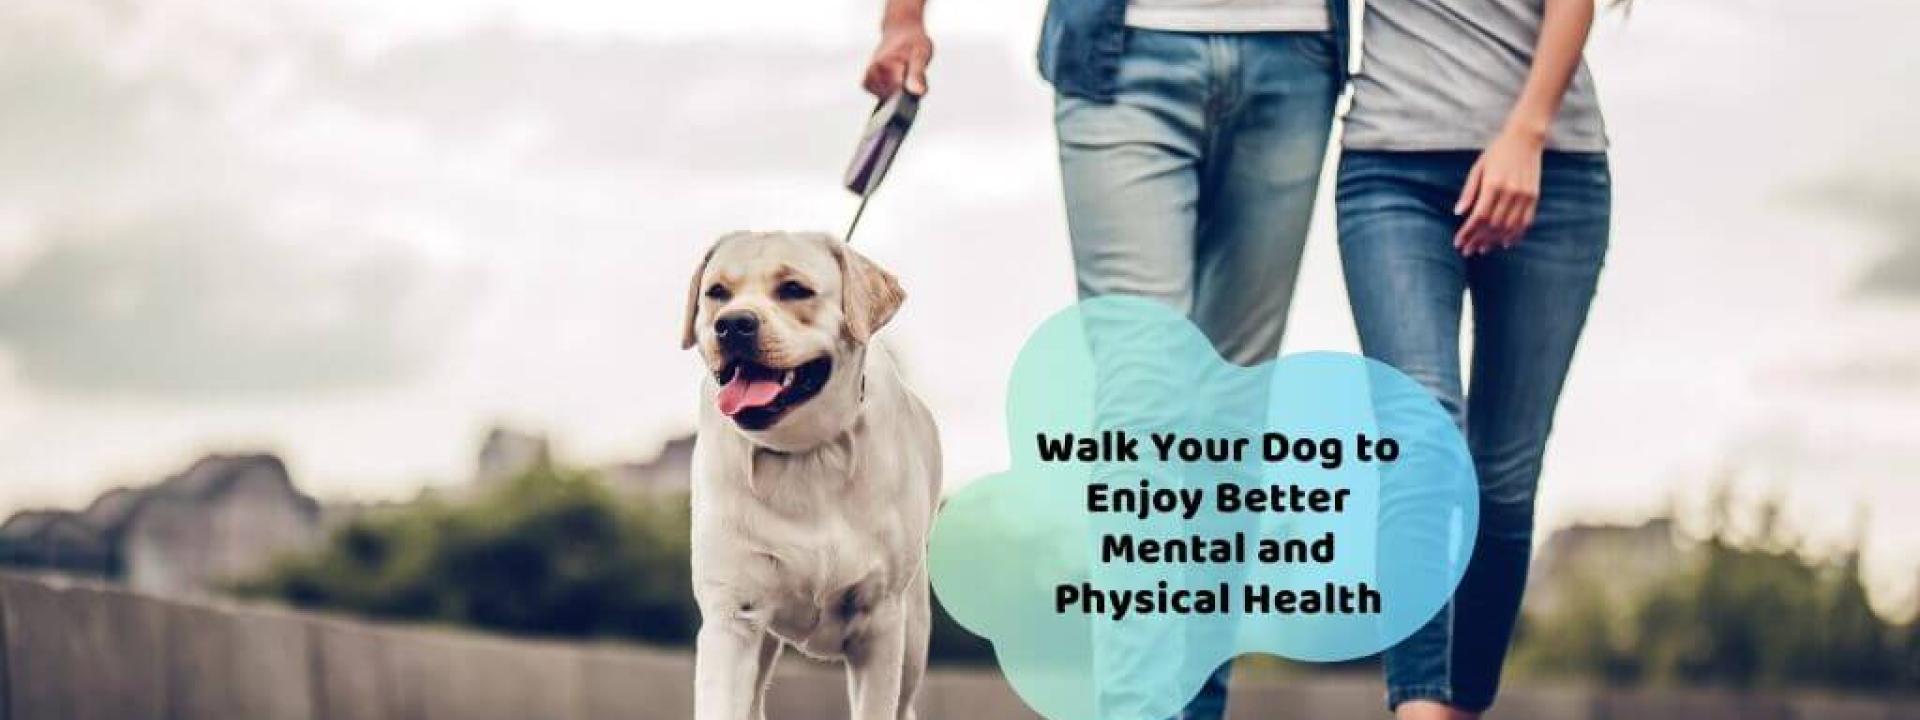 https://www.metrovetchicago.com/sites/default/files/styles/page_hero_low_1920x720/public/walk-dog-better-physical-mental-health.jpg?itok=xwg72IWo